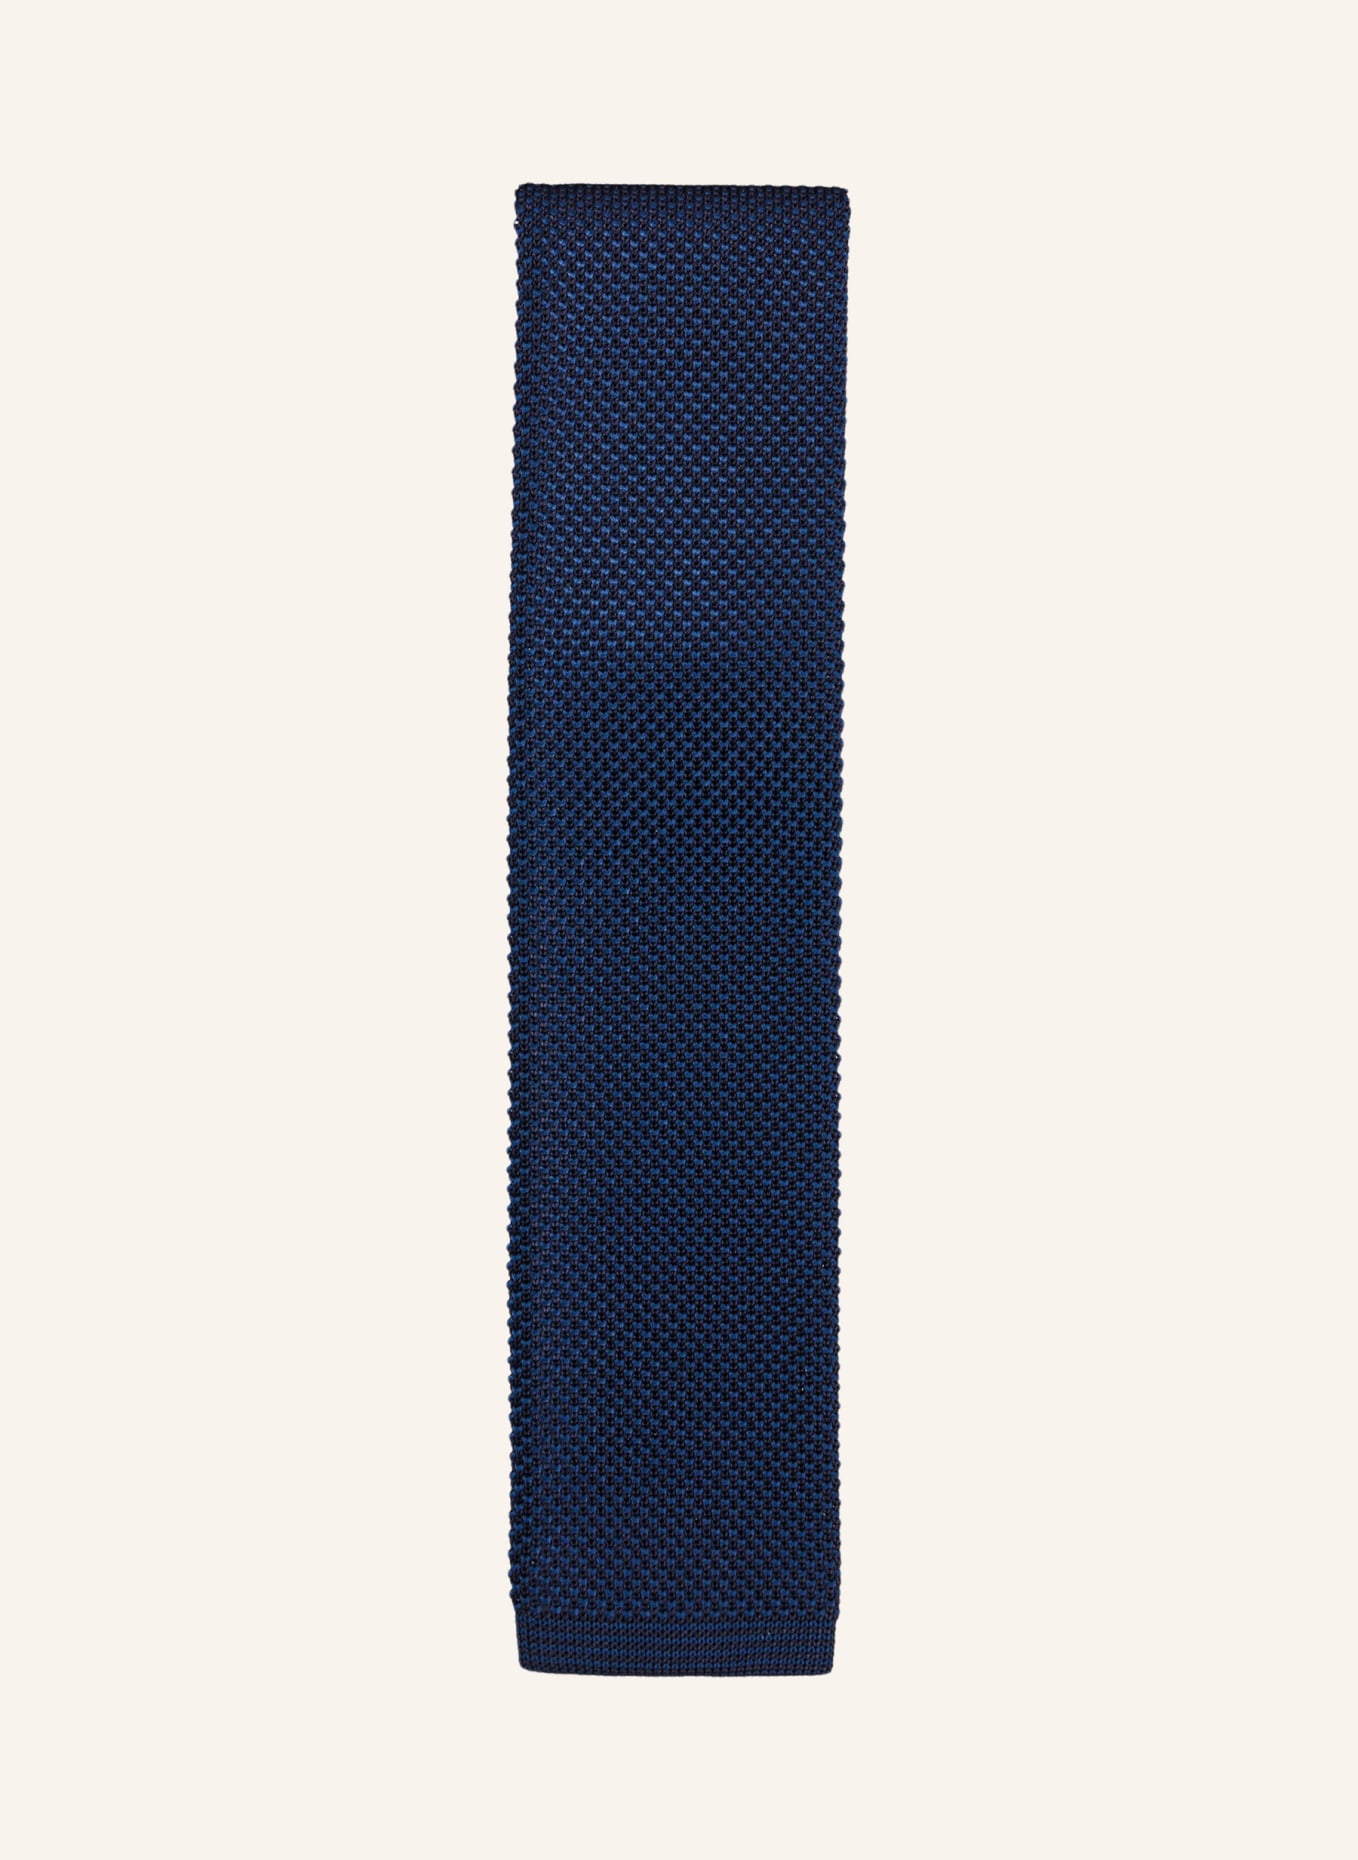 BOSS Krawatte H-KNIT TIE 6 CM-222, Farbe: DUNKELBLAU (Bild 1)